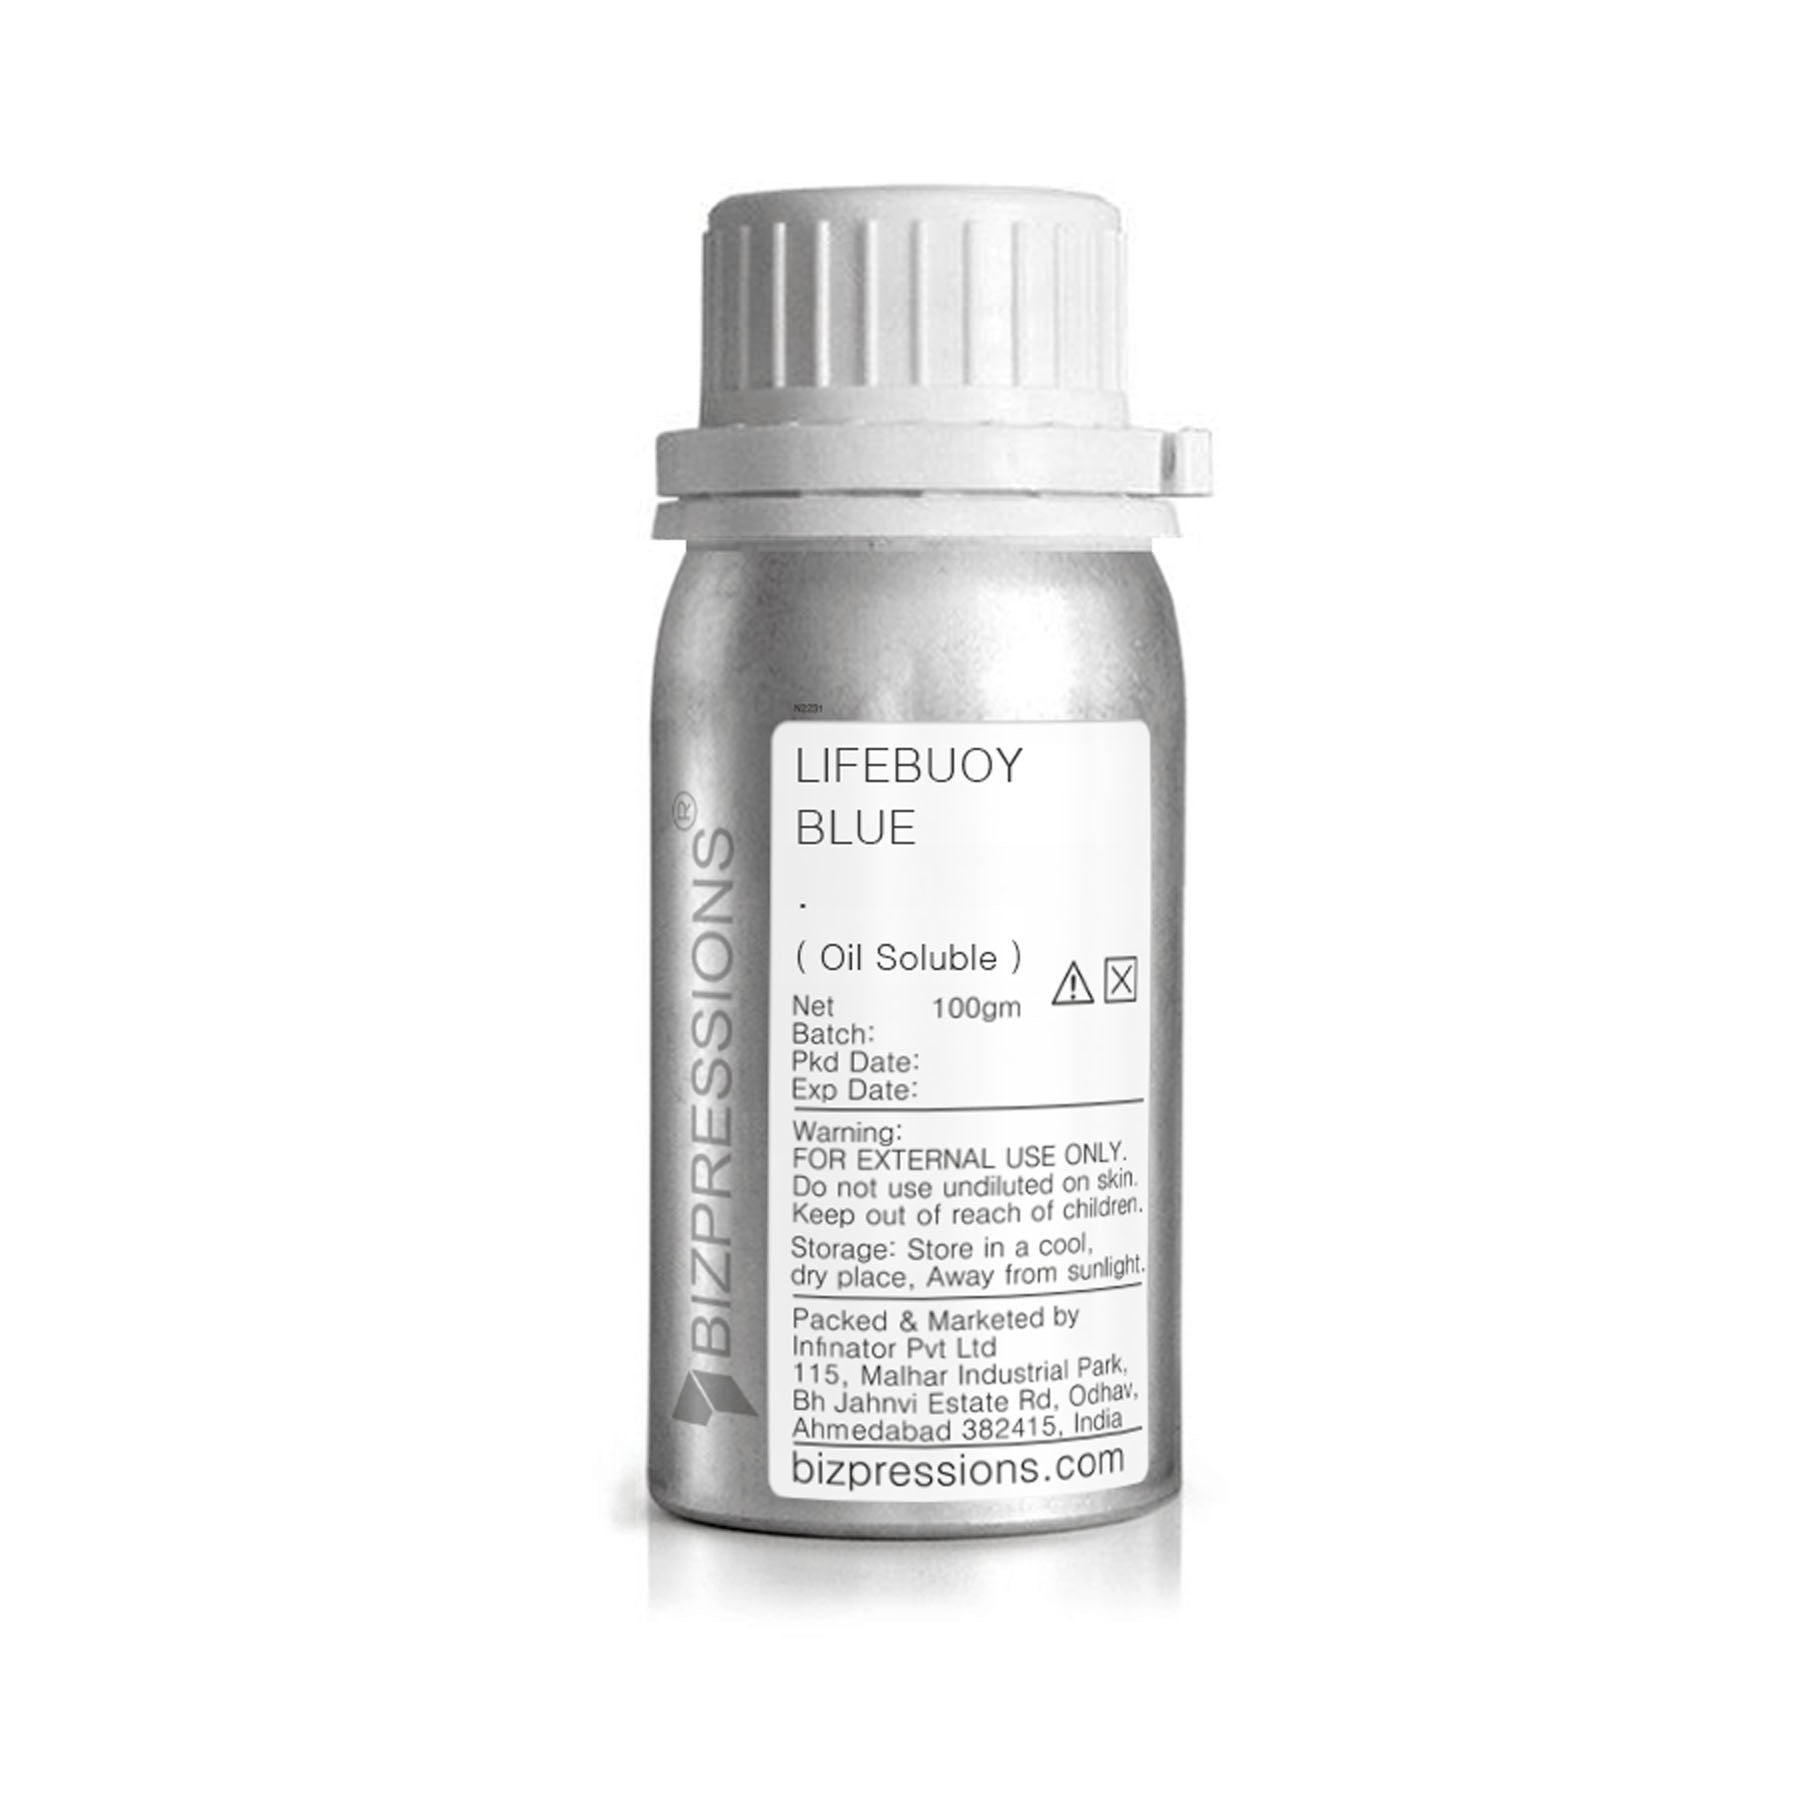 LIFEBUOY BLUE - Fragrance ( Oil Soluble ) - 100 gm